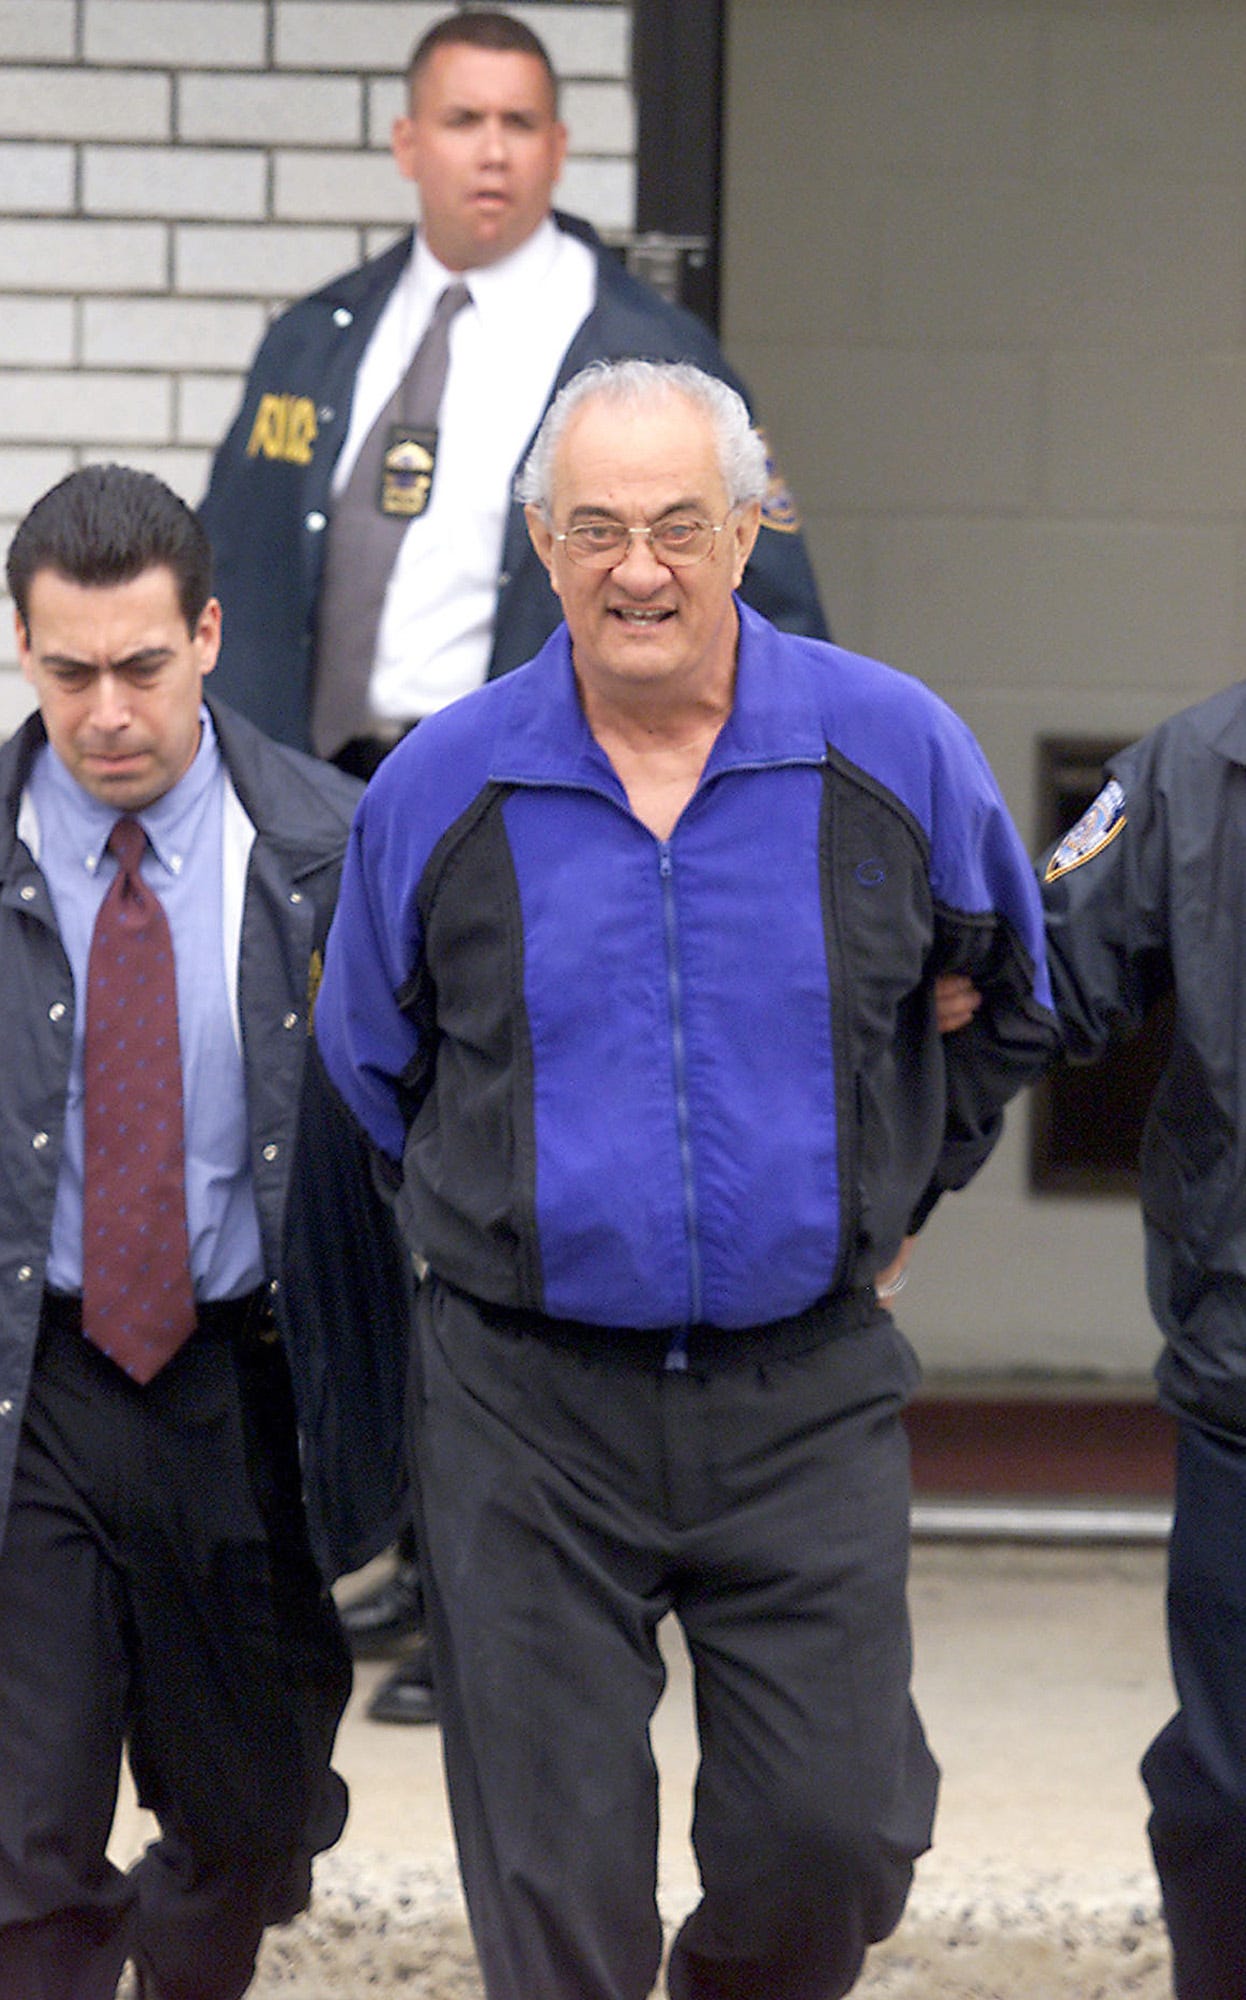 Gotti of Gambino Mafia family seeks early release from prison